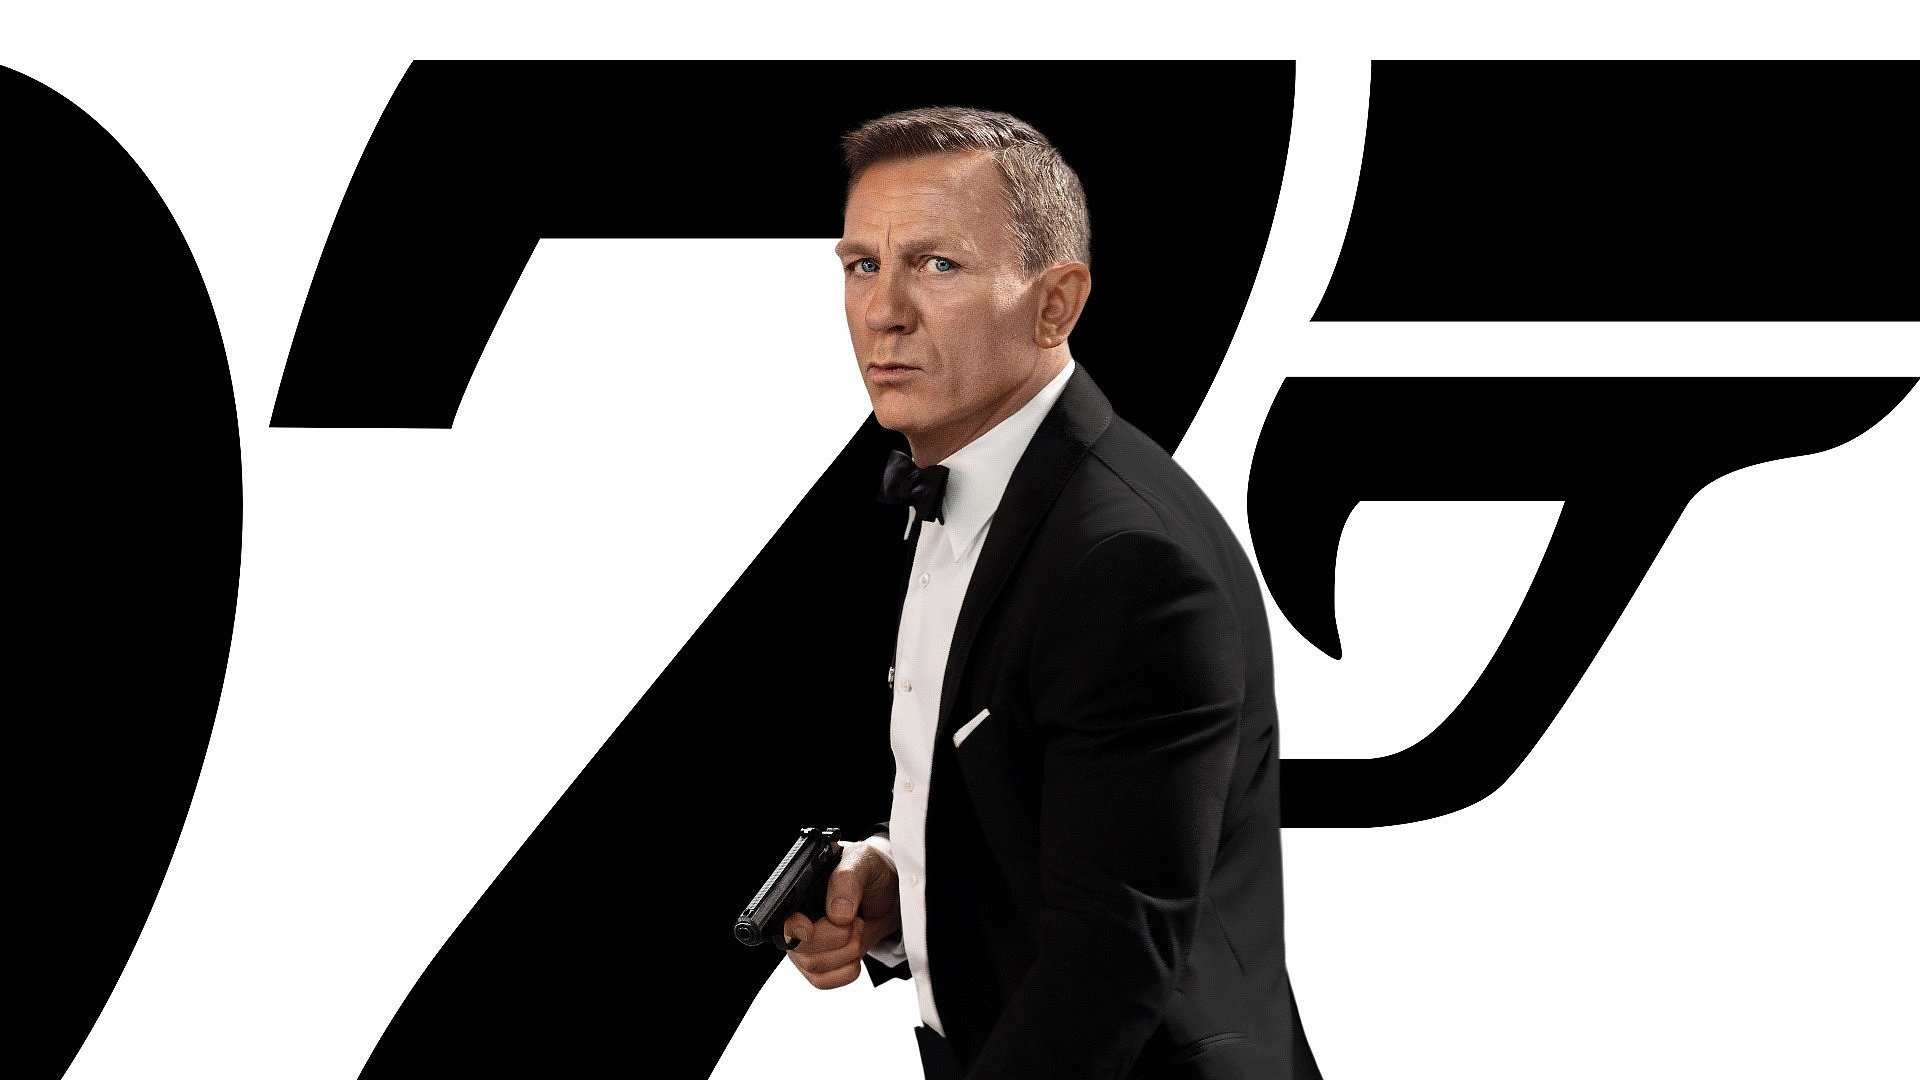 Bond - No Time To Die